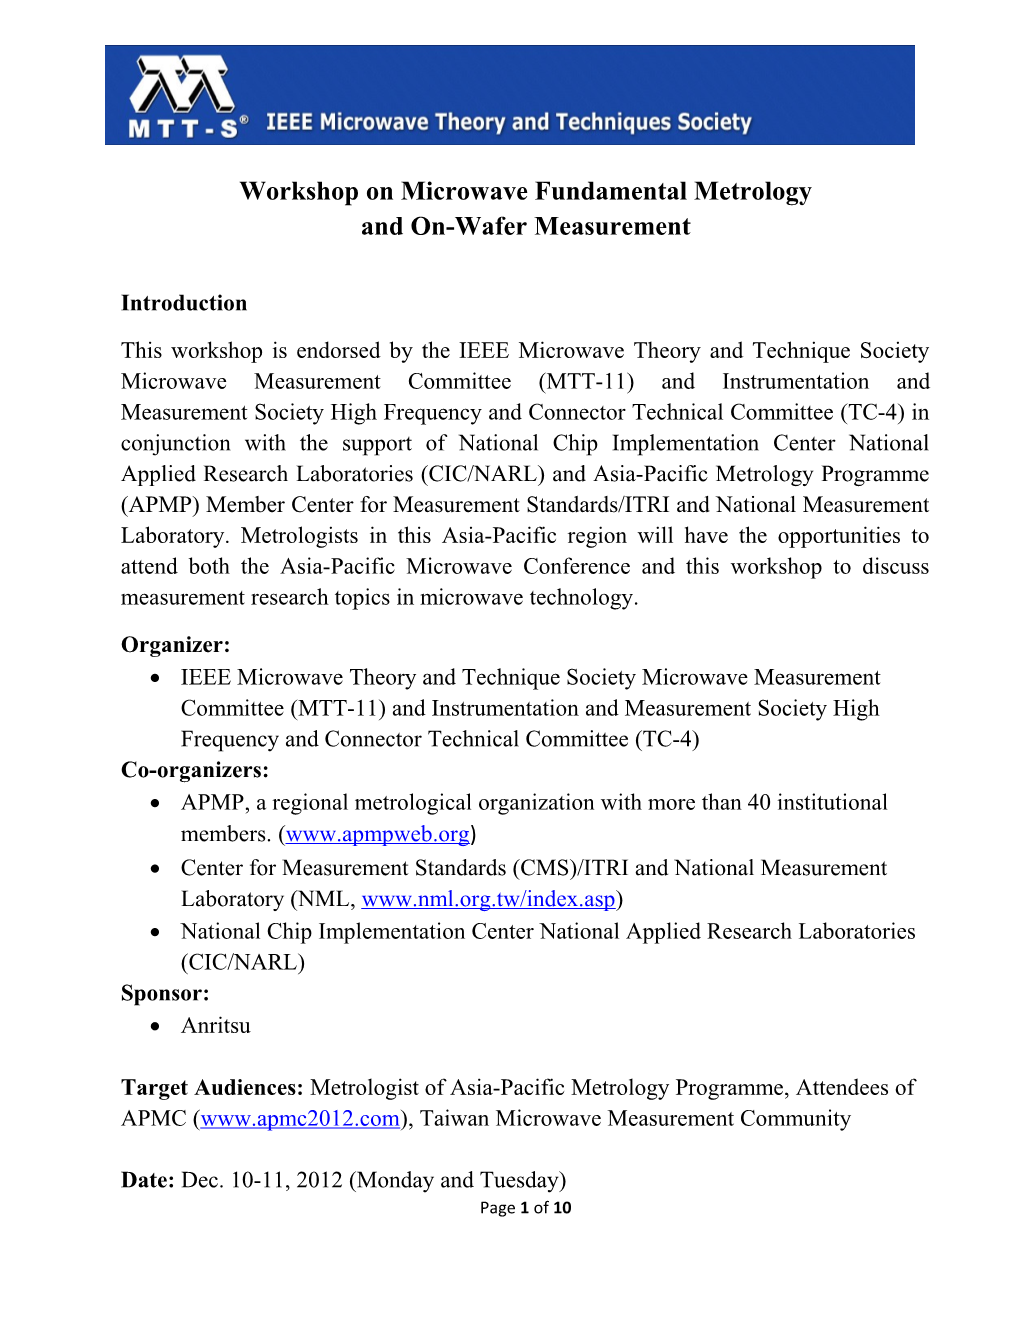 Workshop on Microwave Fundamental Metrology and On-Wafer Measurement